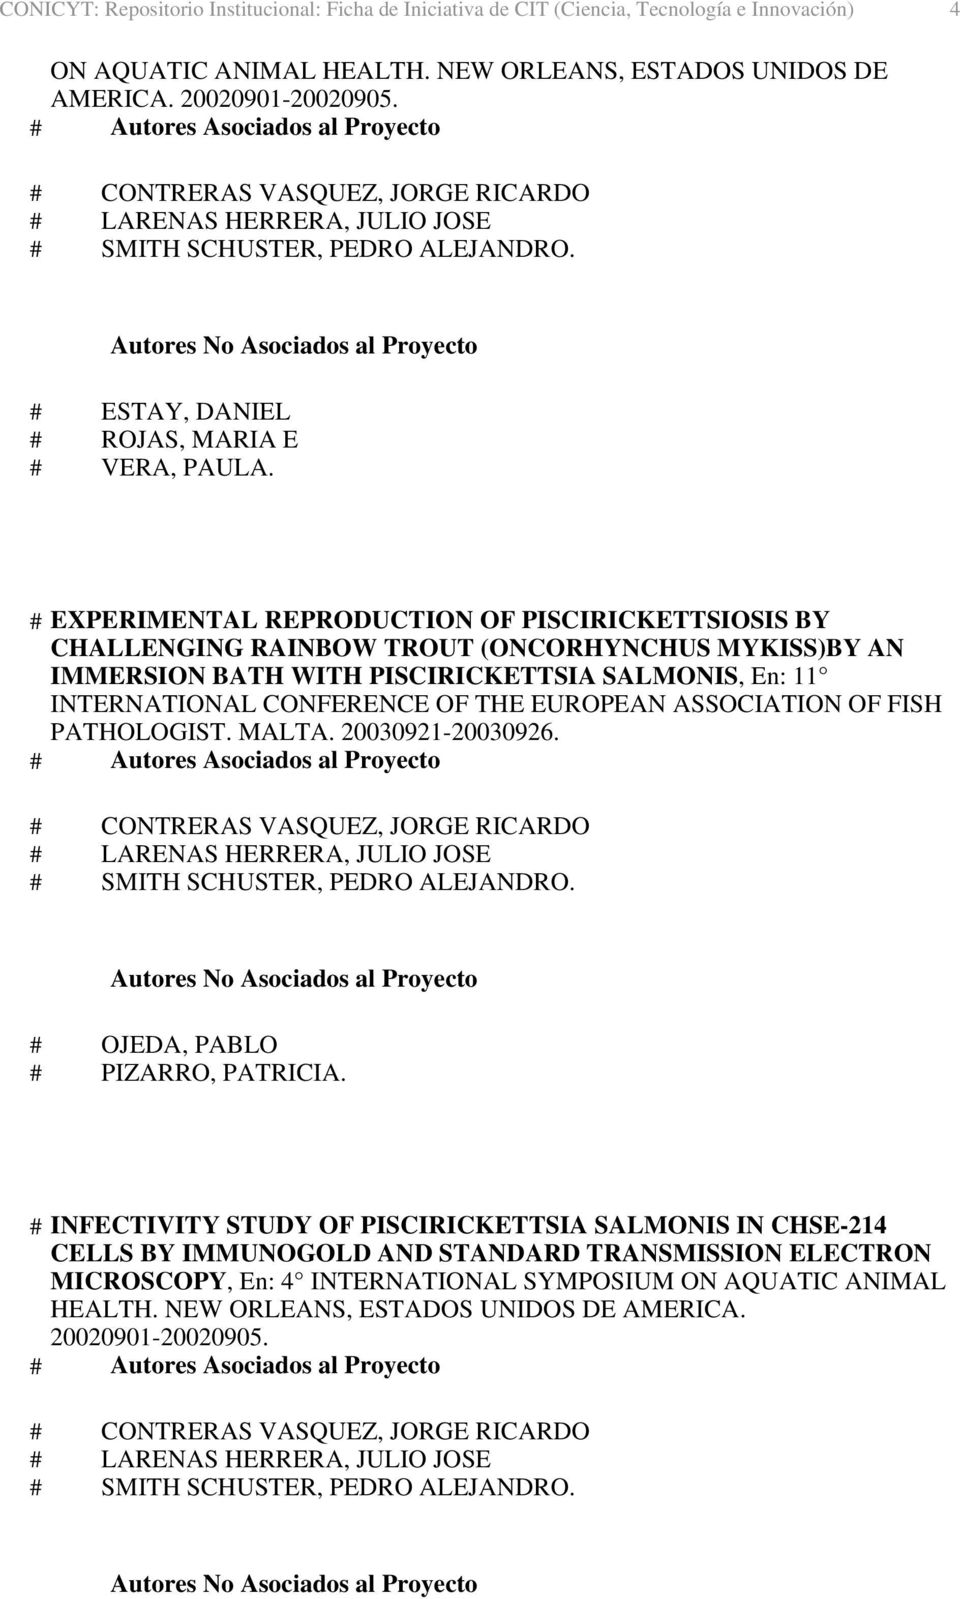 11 INTERNATIONAL CONFERENCE OF THE EUROPEAN ASSOCIATION OF FISH PATHOLOGIST. MALTA. 20030921-20030926. # OJEDA, PABLO # PIZARRO, PATRICIA.